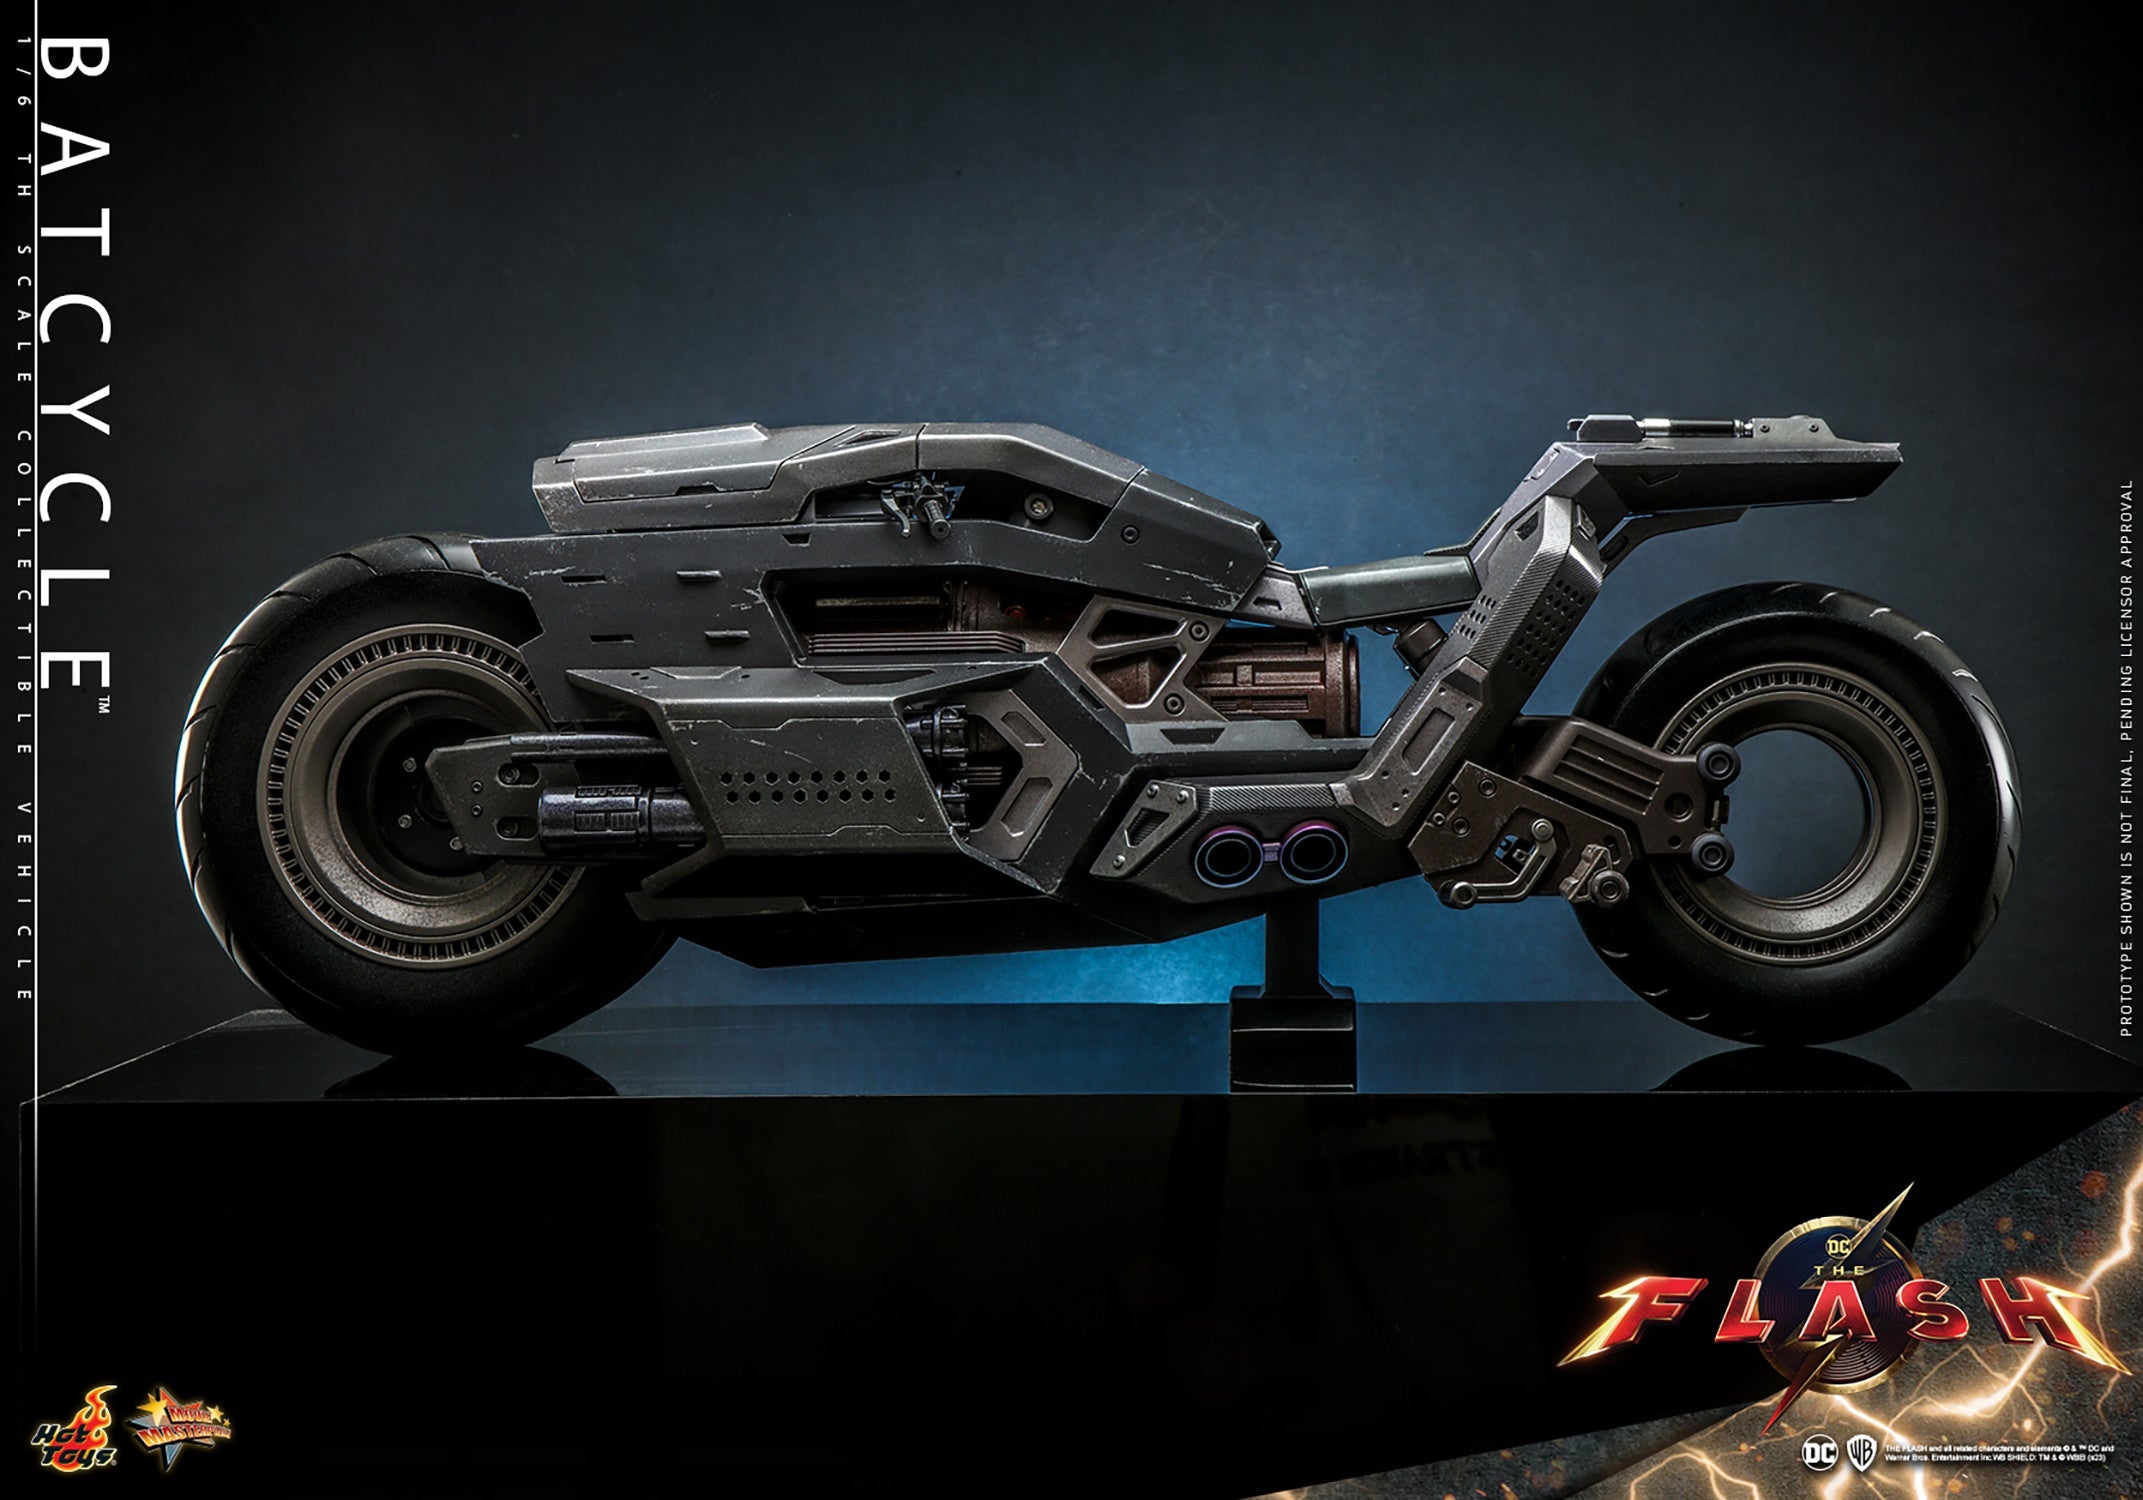 Batman & Batcycle: The Flash: Dc Comics Hot Toys